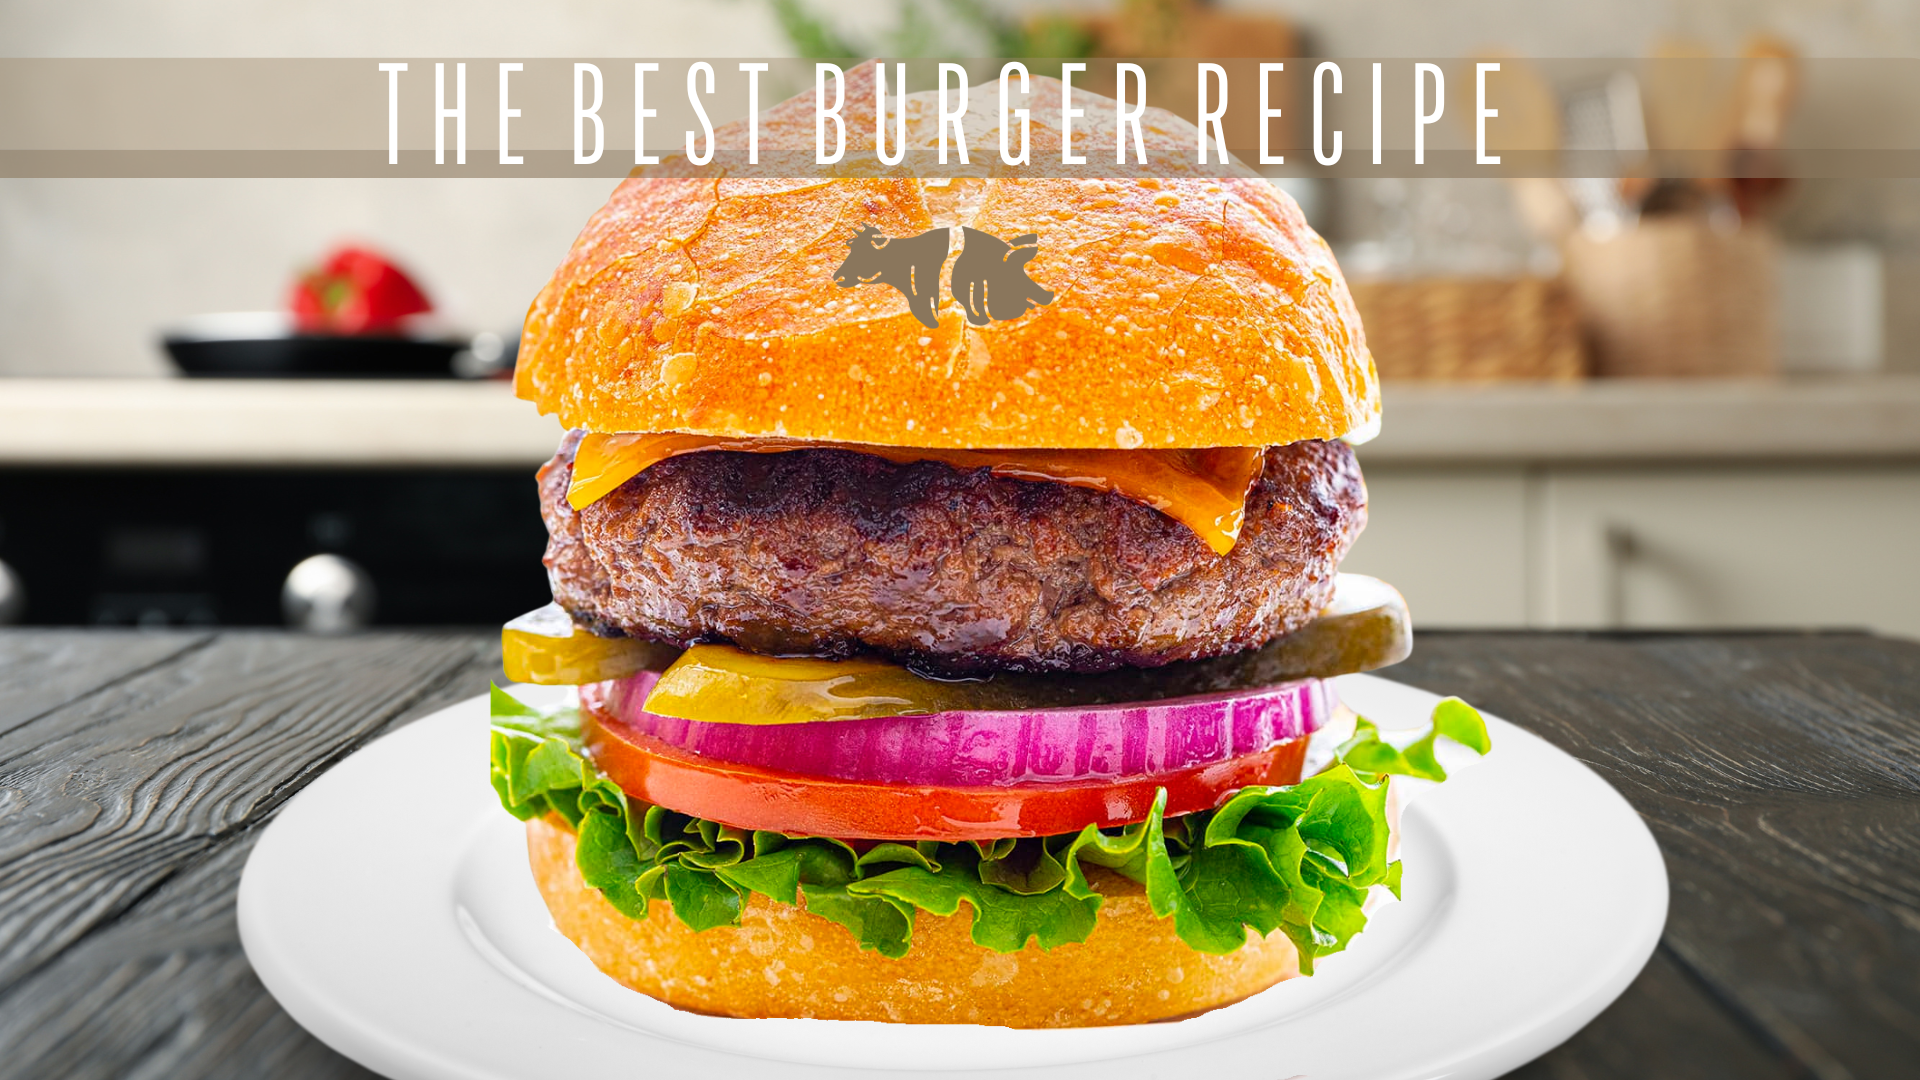 The Best Burger Recipe